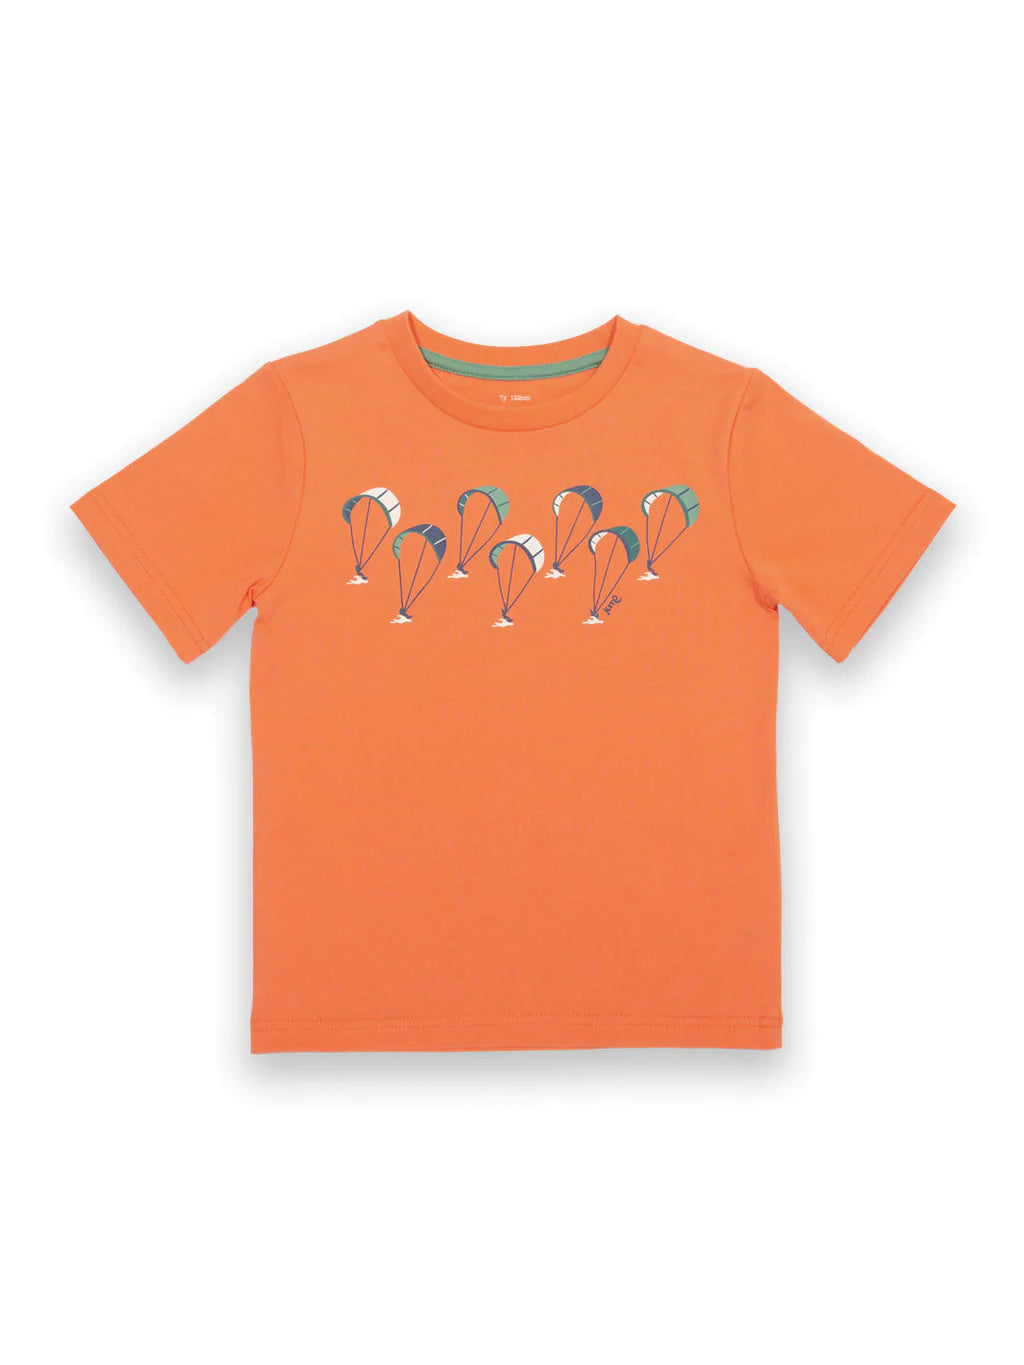 Kite Boys Surfer T-shirt Orange Short Sleeved Top | New Season